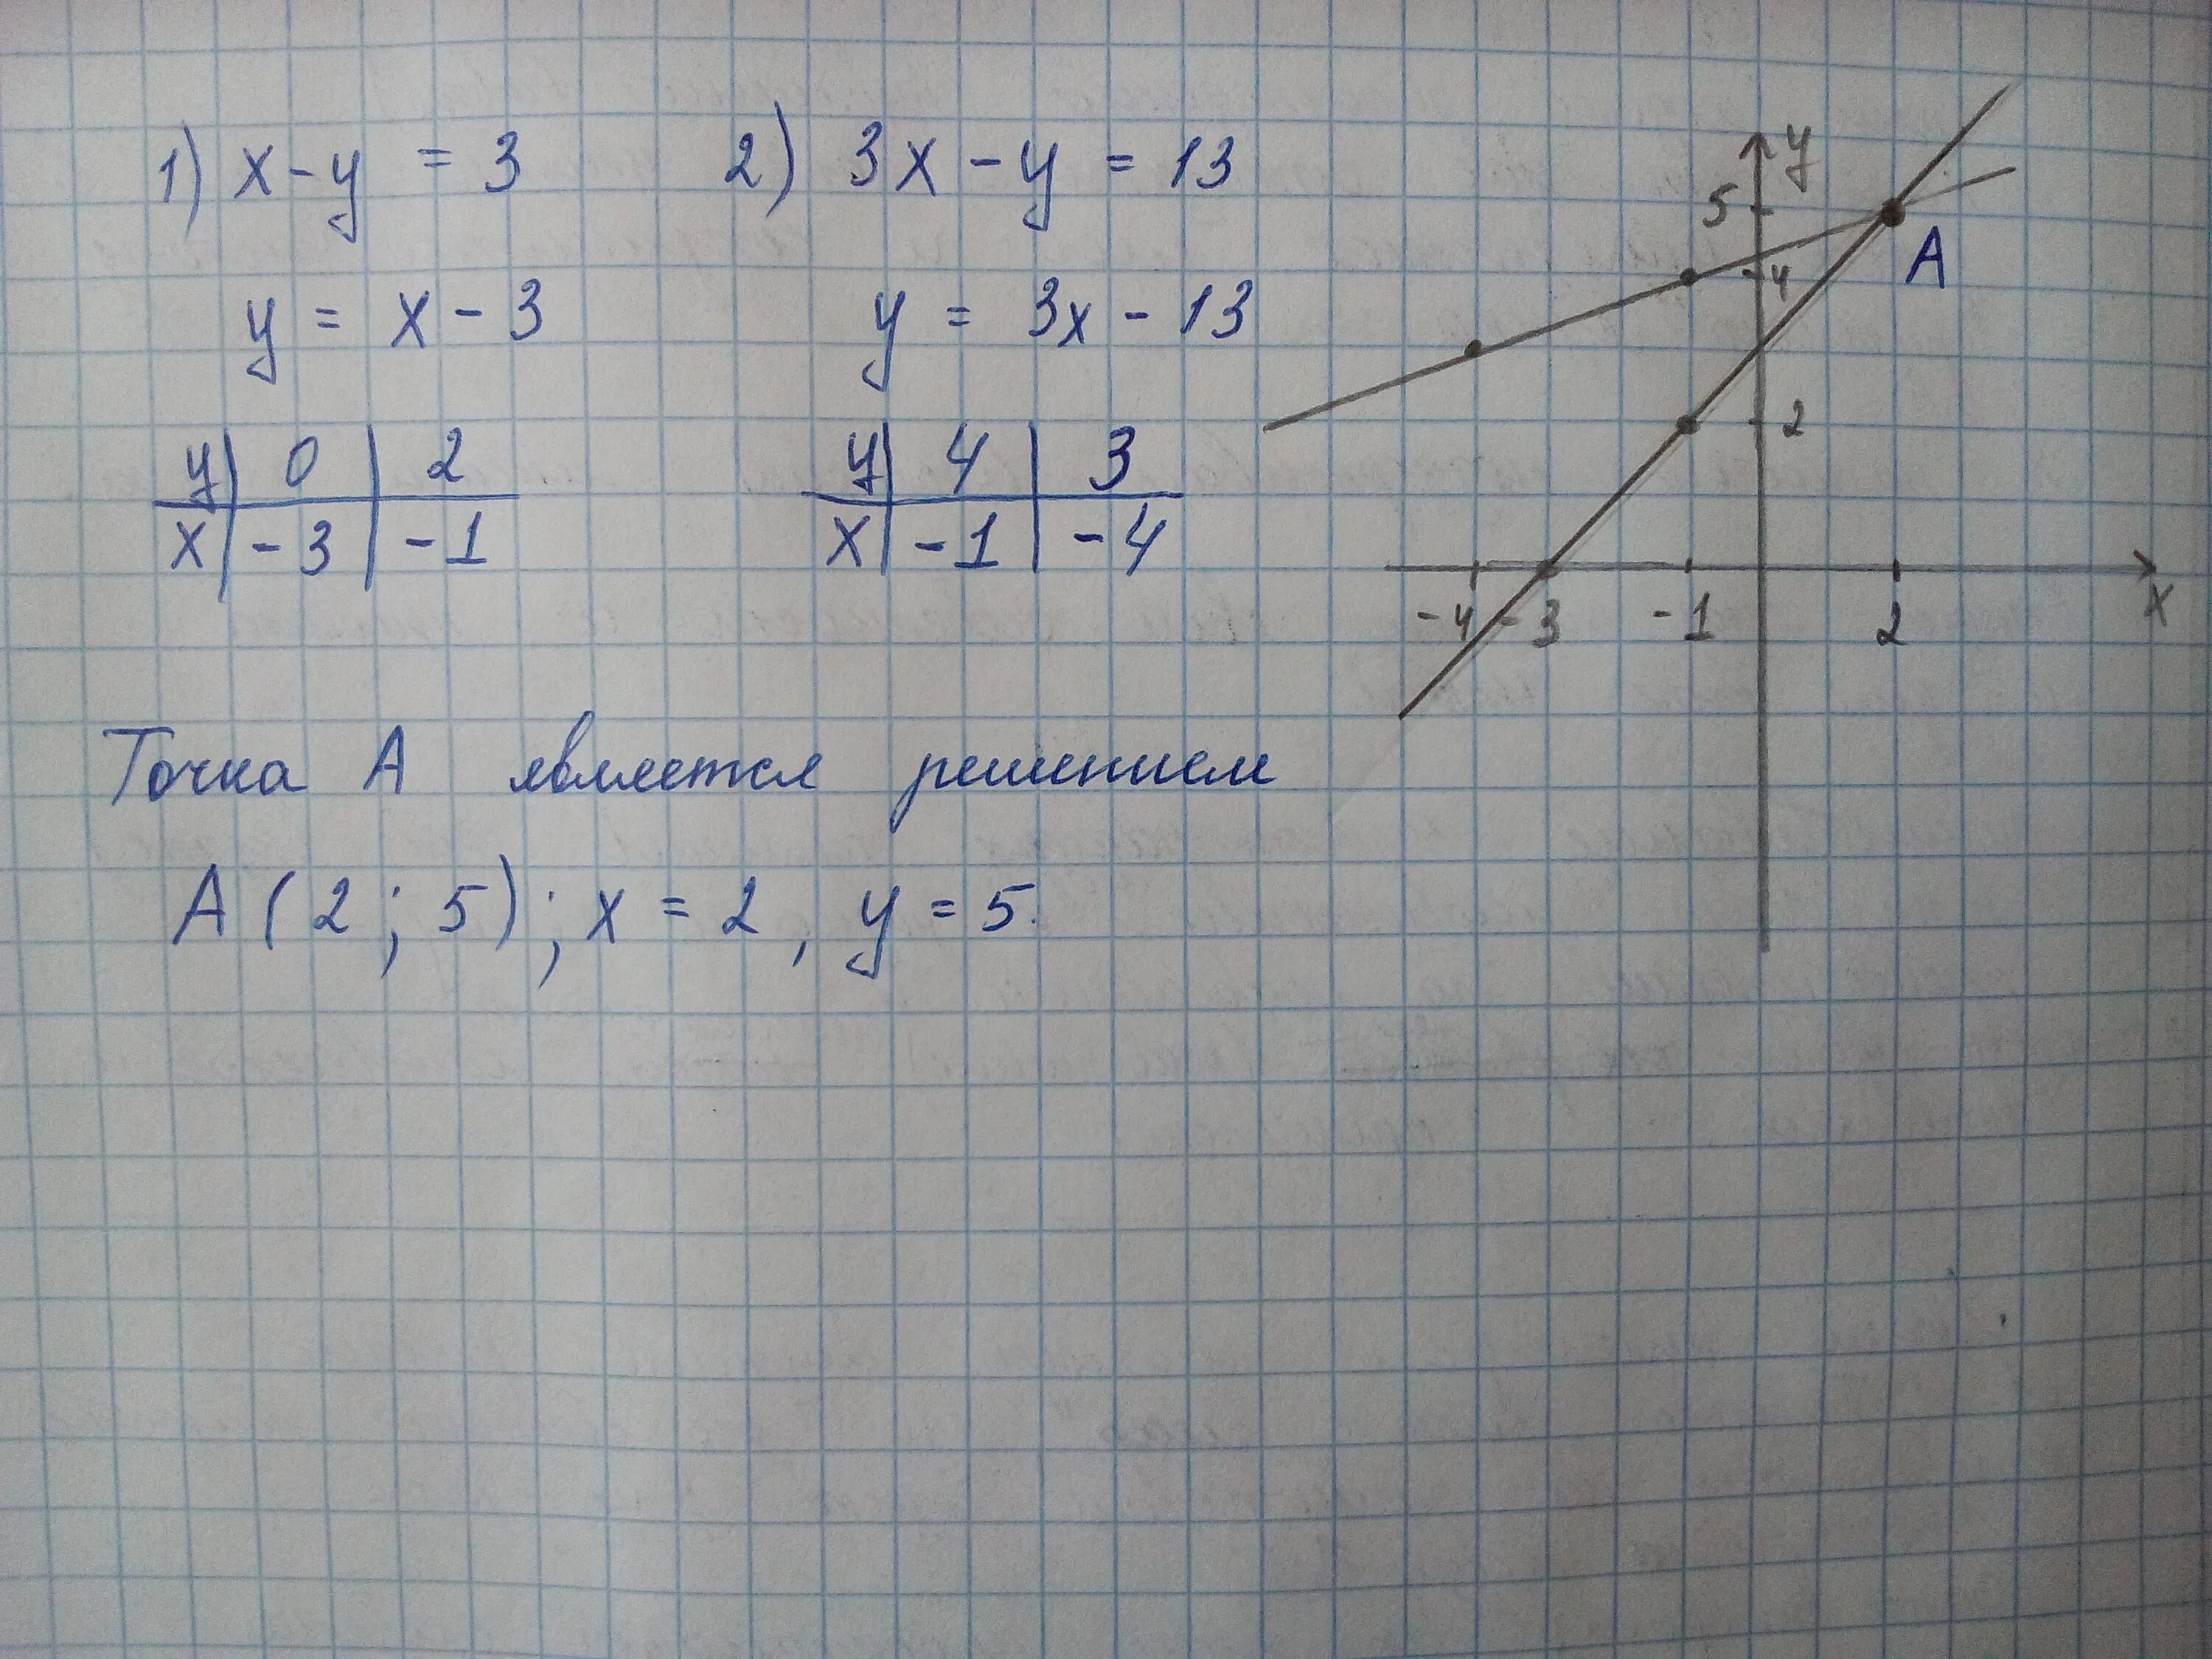 3x 5 6 x 3 решение. Решите методом подстановки систему уравнений x+5y 15. Решение системных уравнений y=x-6;y=4-1,5x. Решение методом подстановки систему уравнений x+5y 15 2x-y 8. Решение систем уравнений x+5y=15.